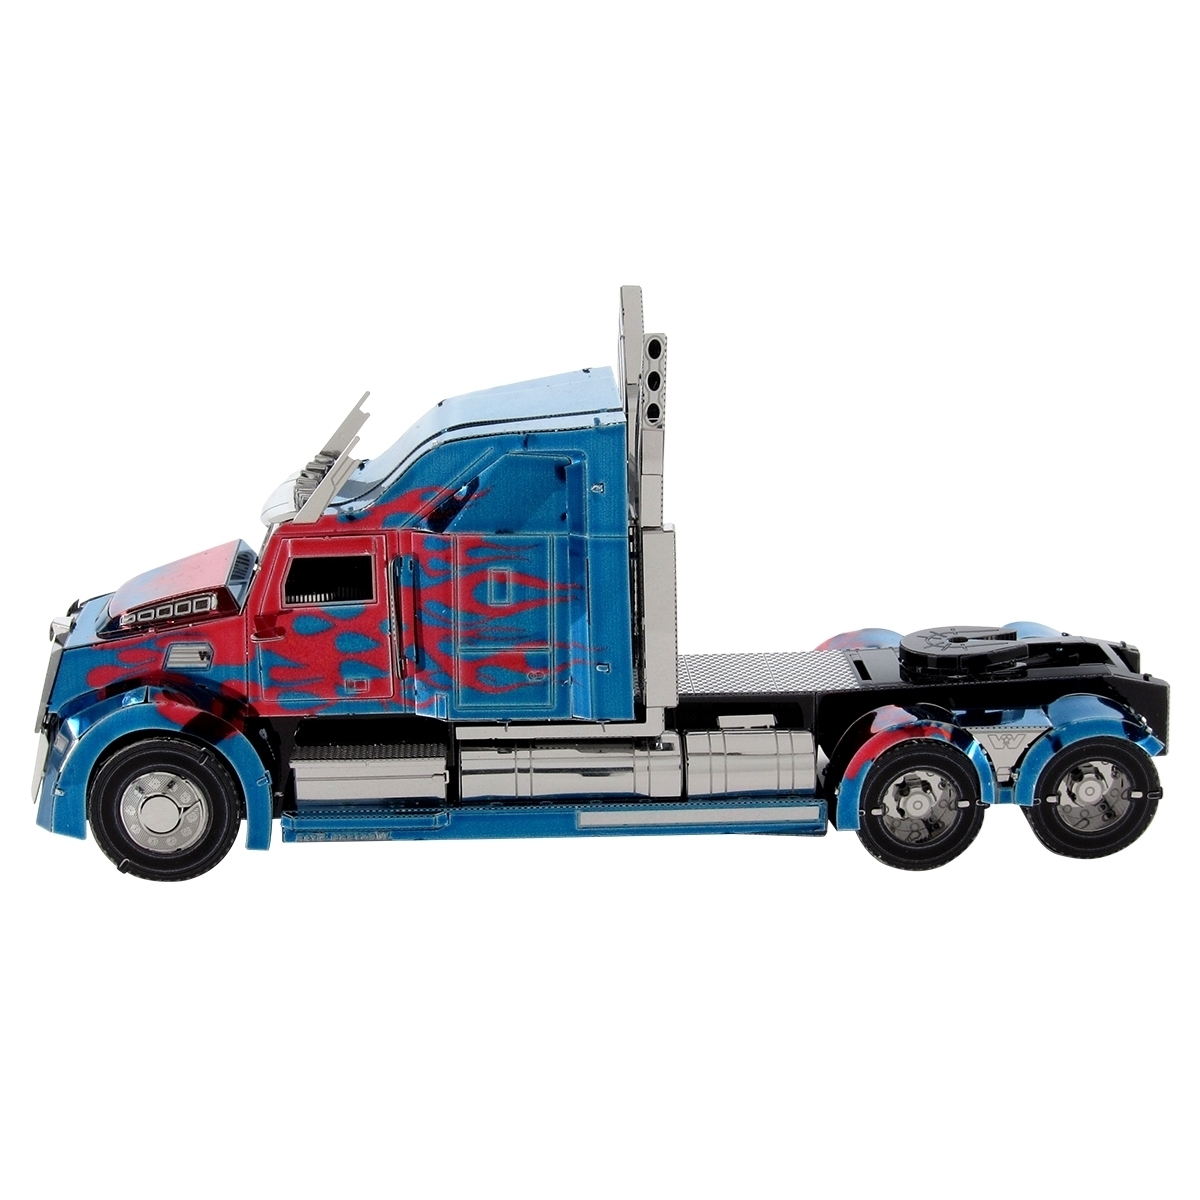 Metal earth Optimus Prime Western Star 5700 Truck Transformers ICONX Kit ICX203 